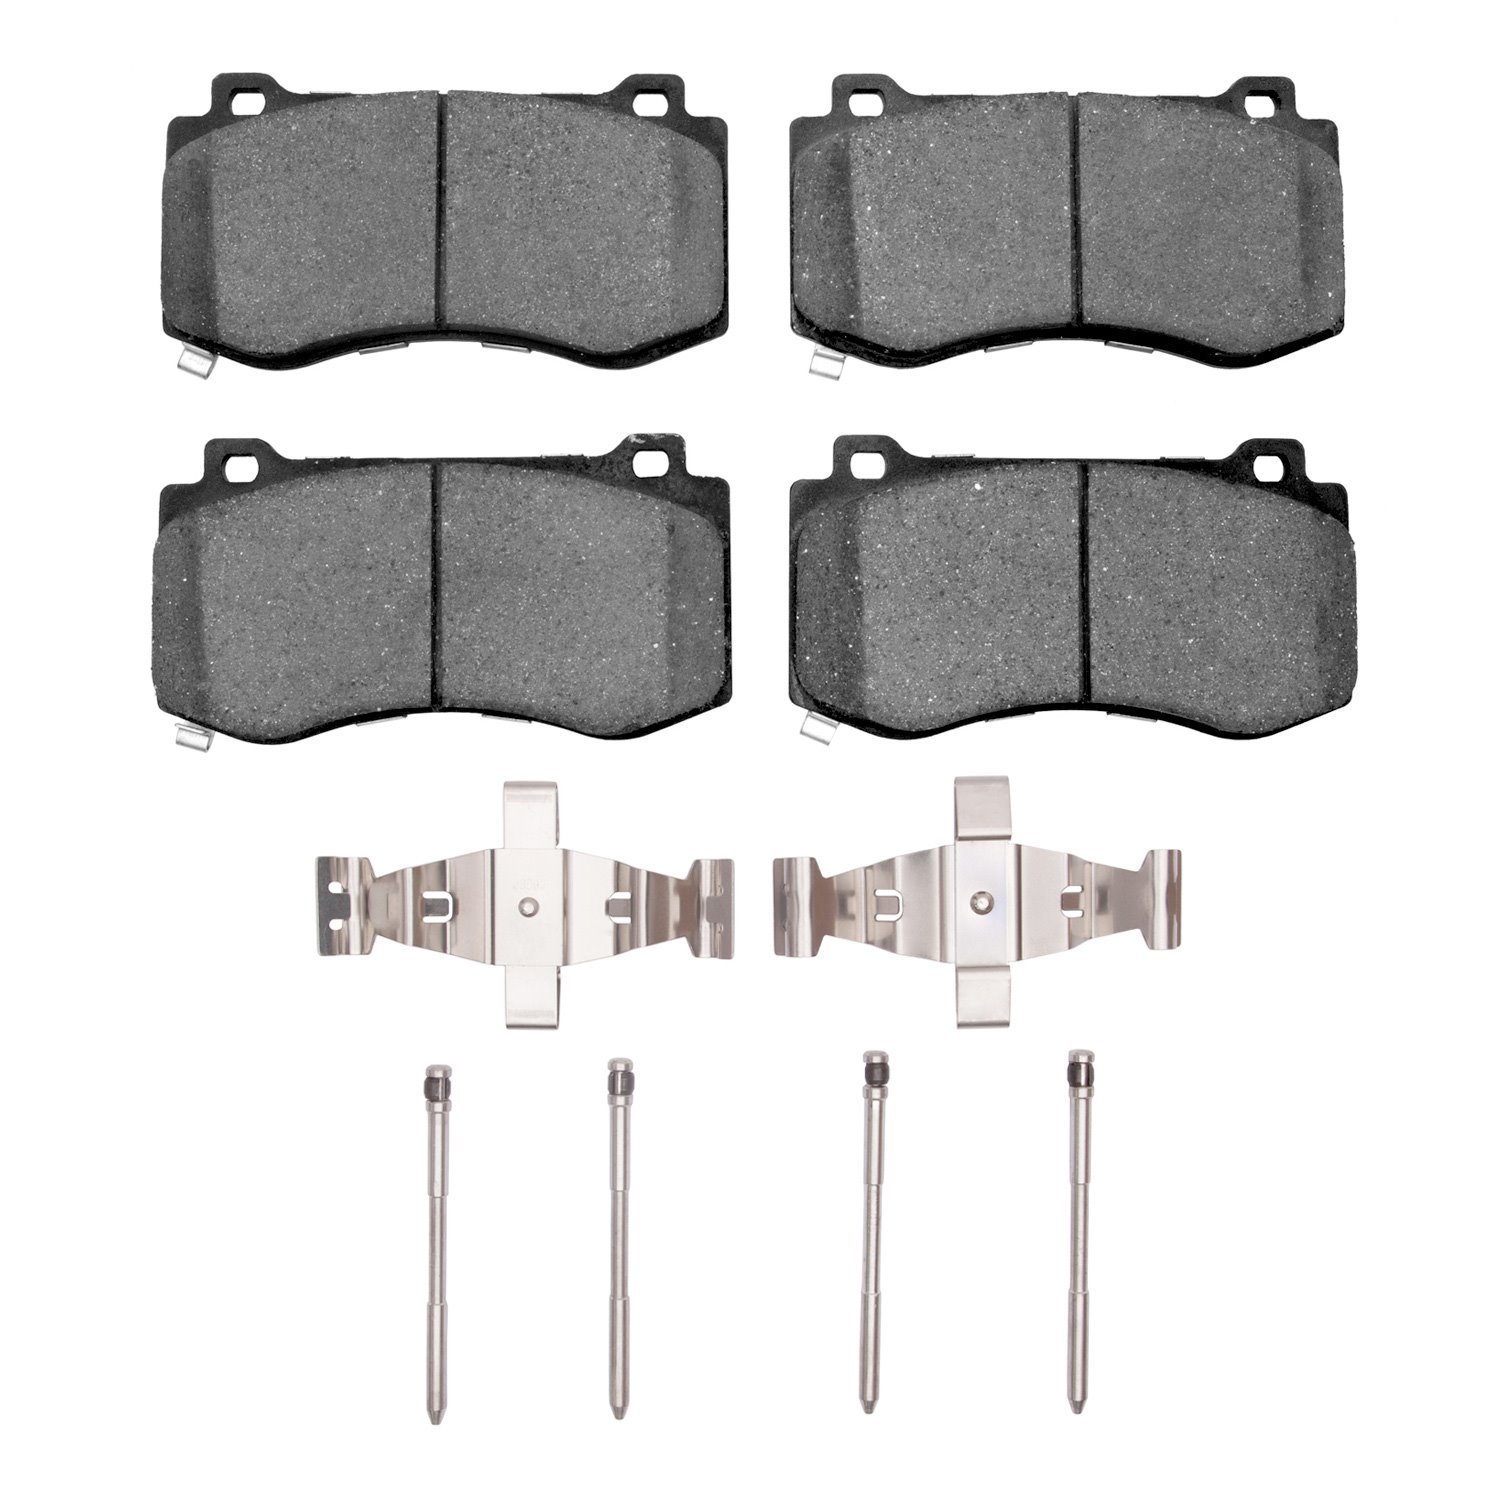 1551-1149-01 5000 Advanced Low-Metallic Brake Pads & Hardware Kit, Fits Select Mopar, Position: Front